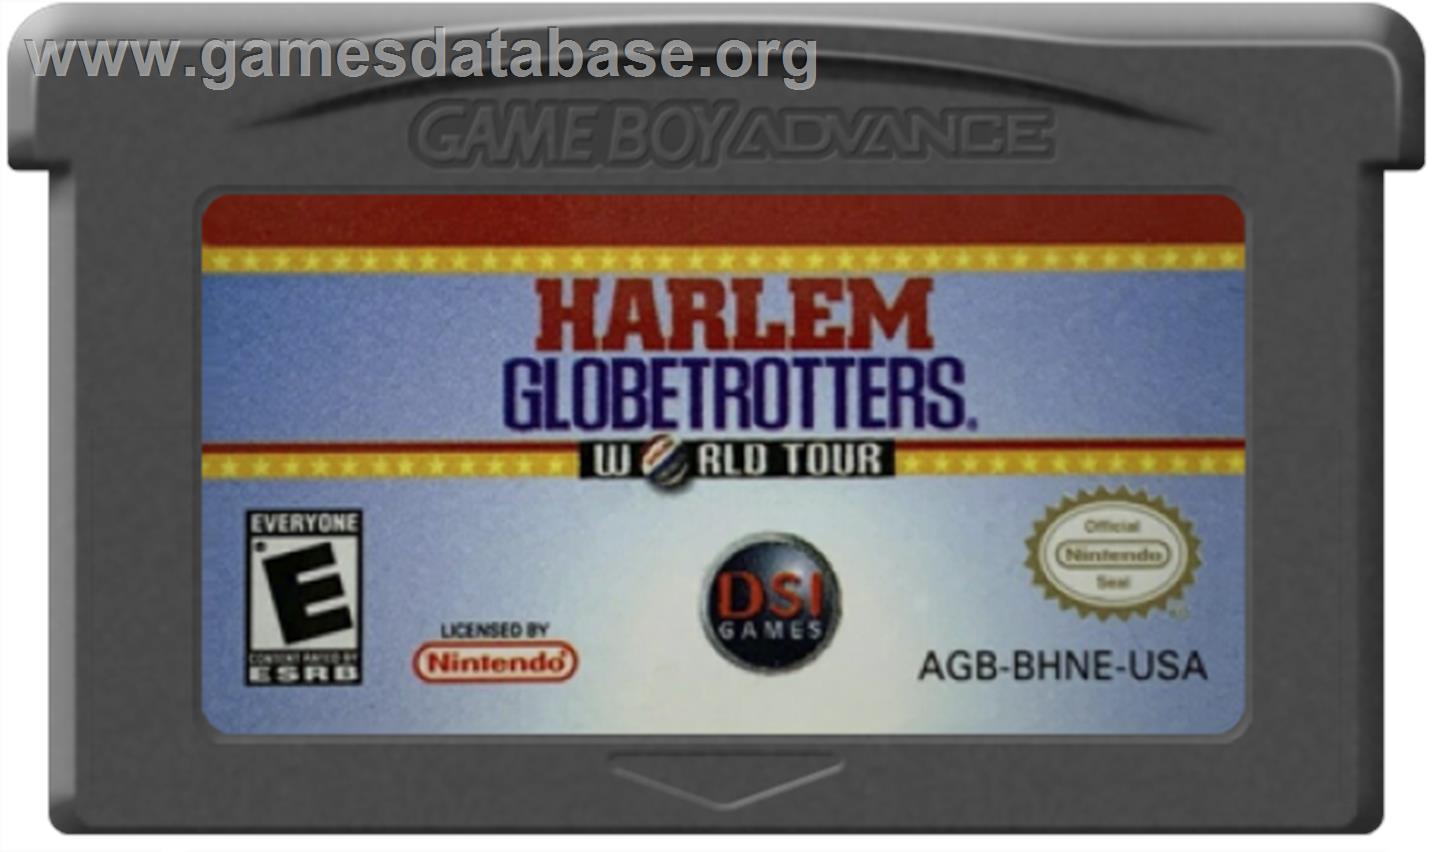 Harlem Globetrotters: World Tour - Nintendo Game Boy Advance - Artwork - Cartridge